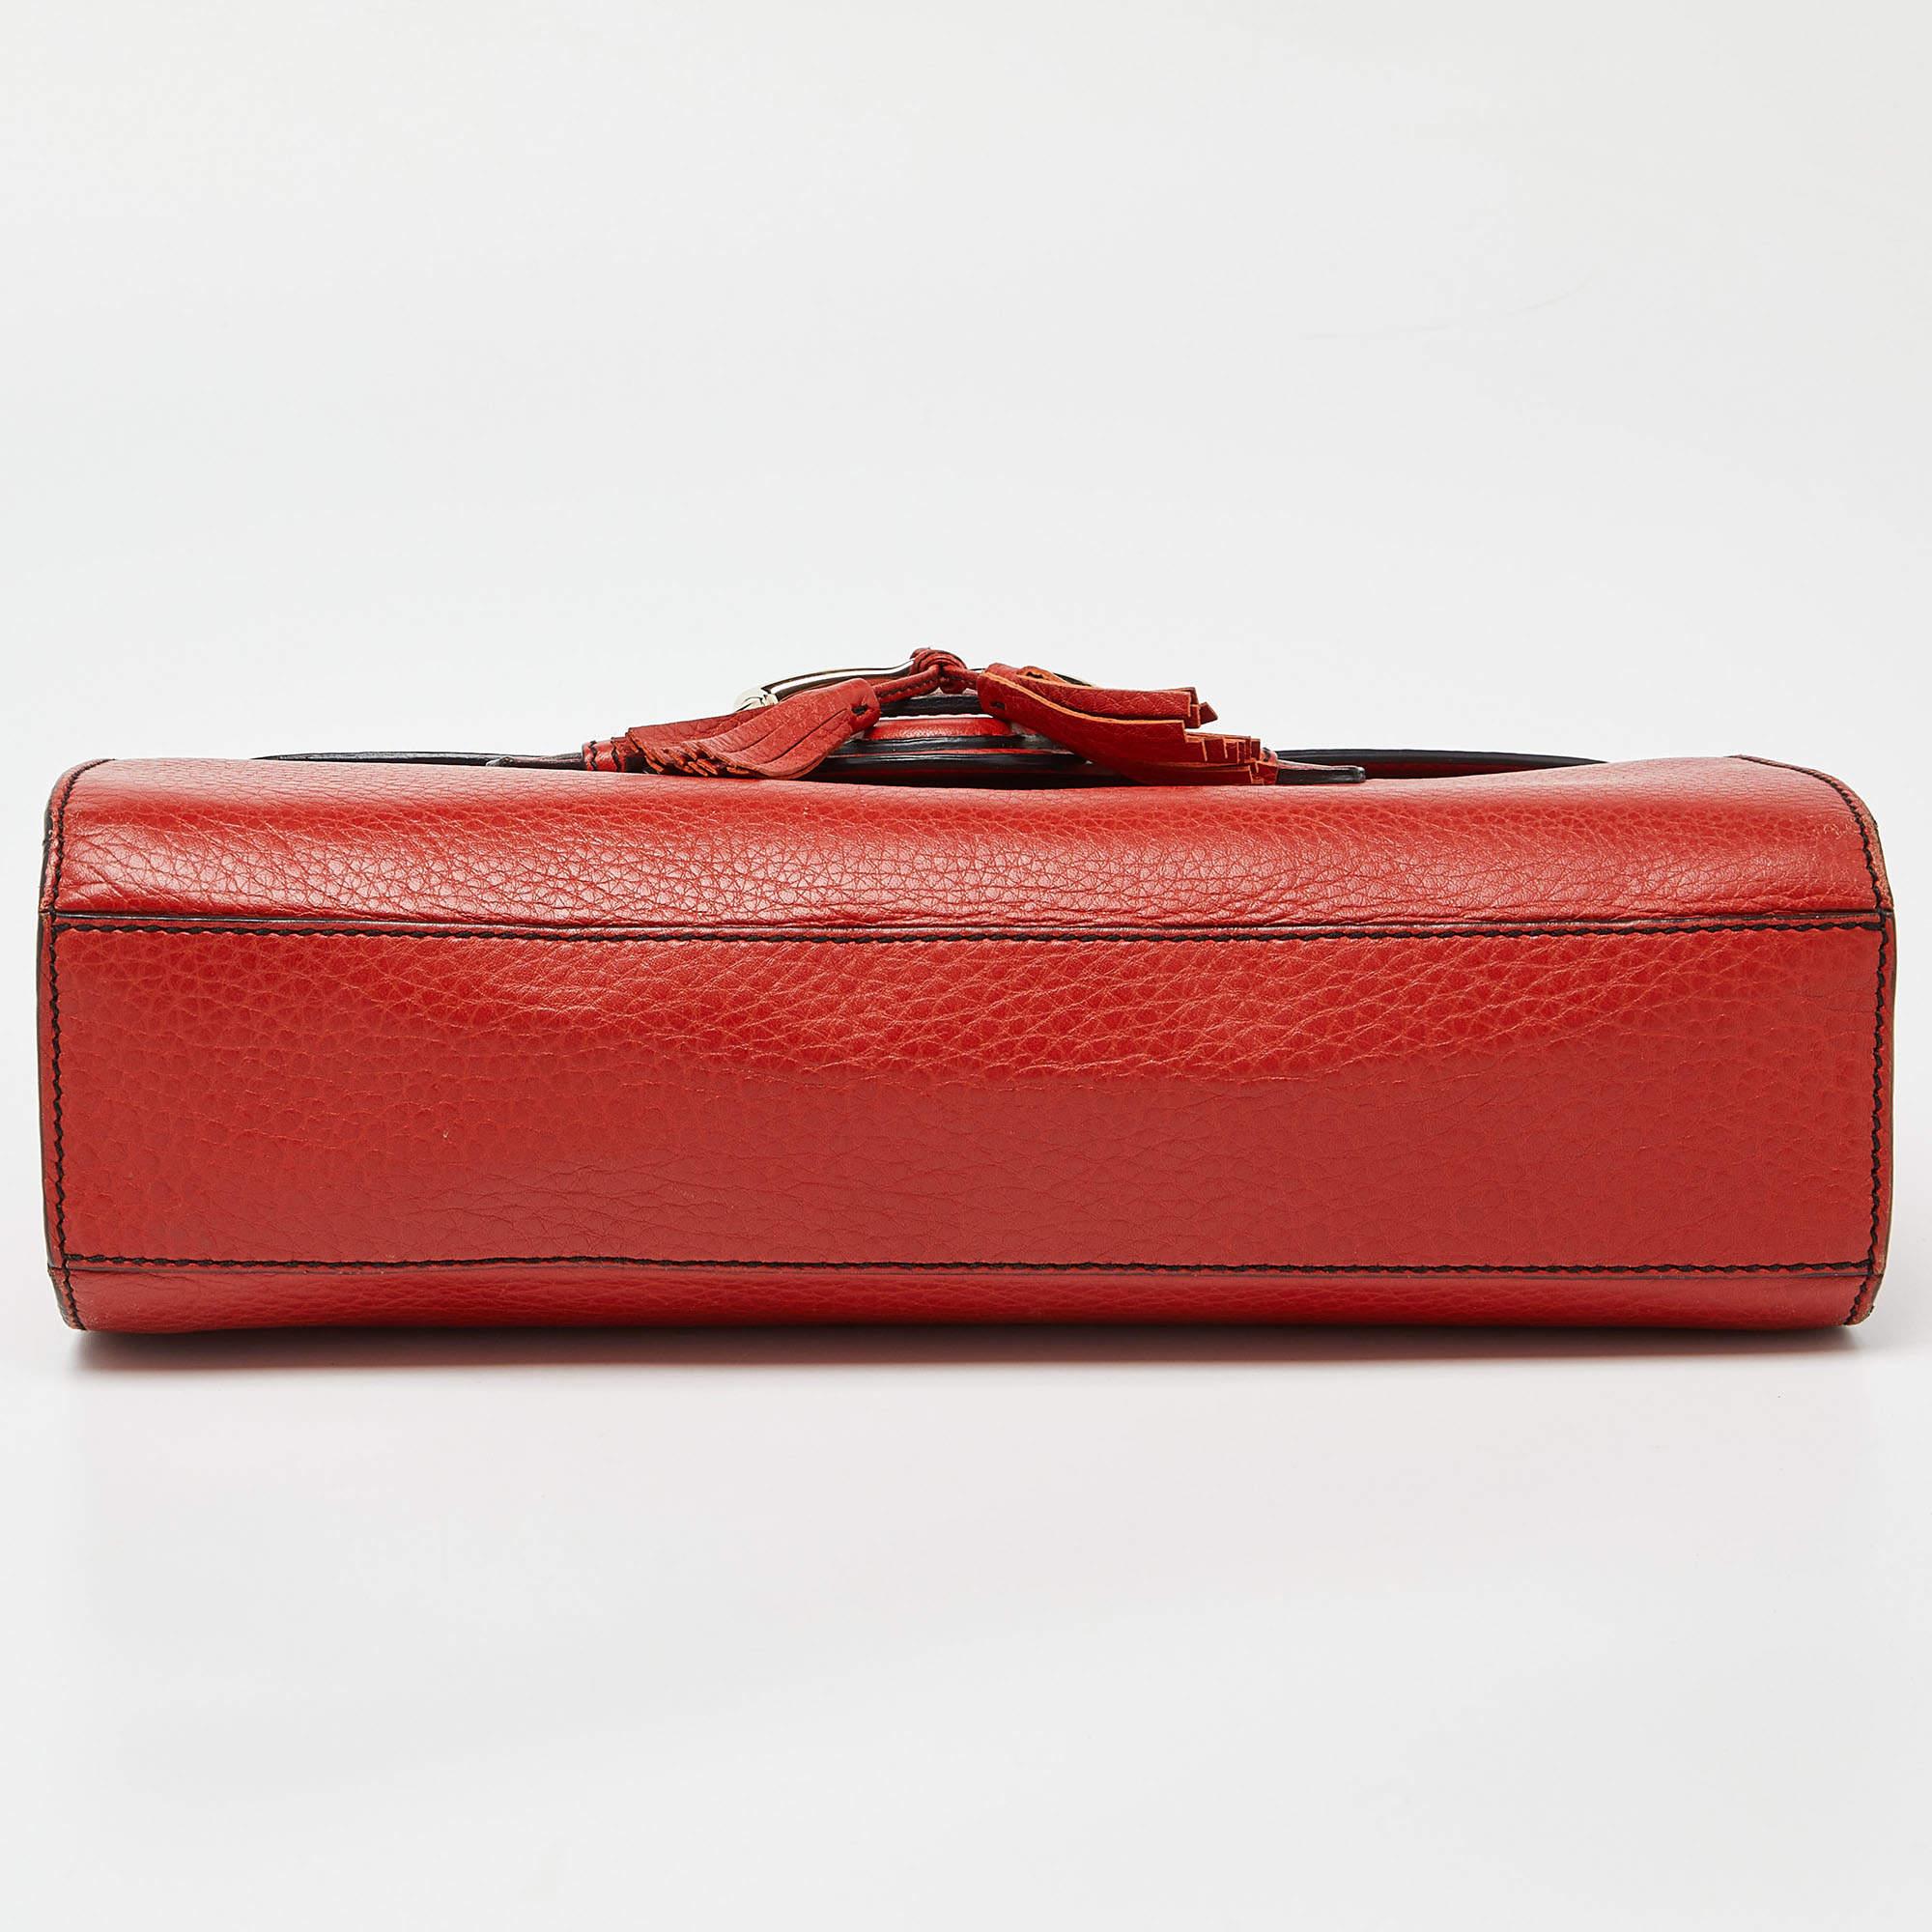 Gucci Coral Red Leather Medium Emily Shoulder Bag For Sale 1